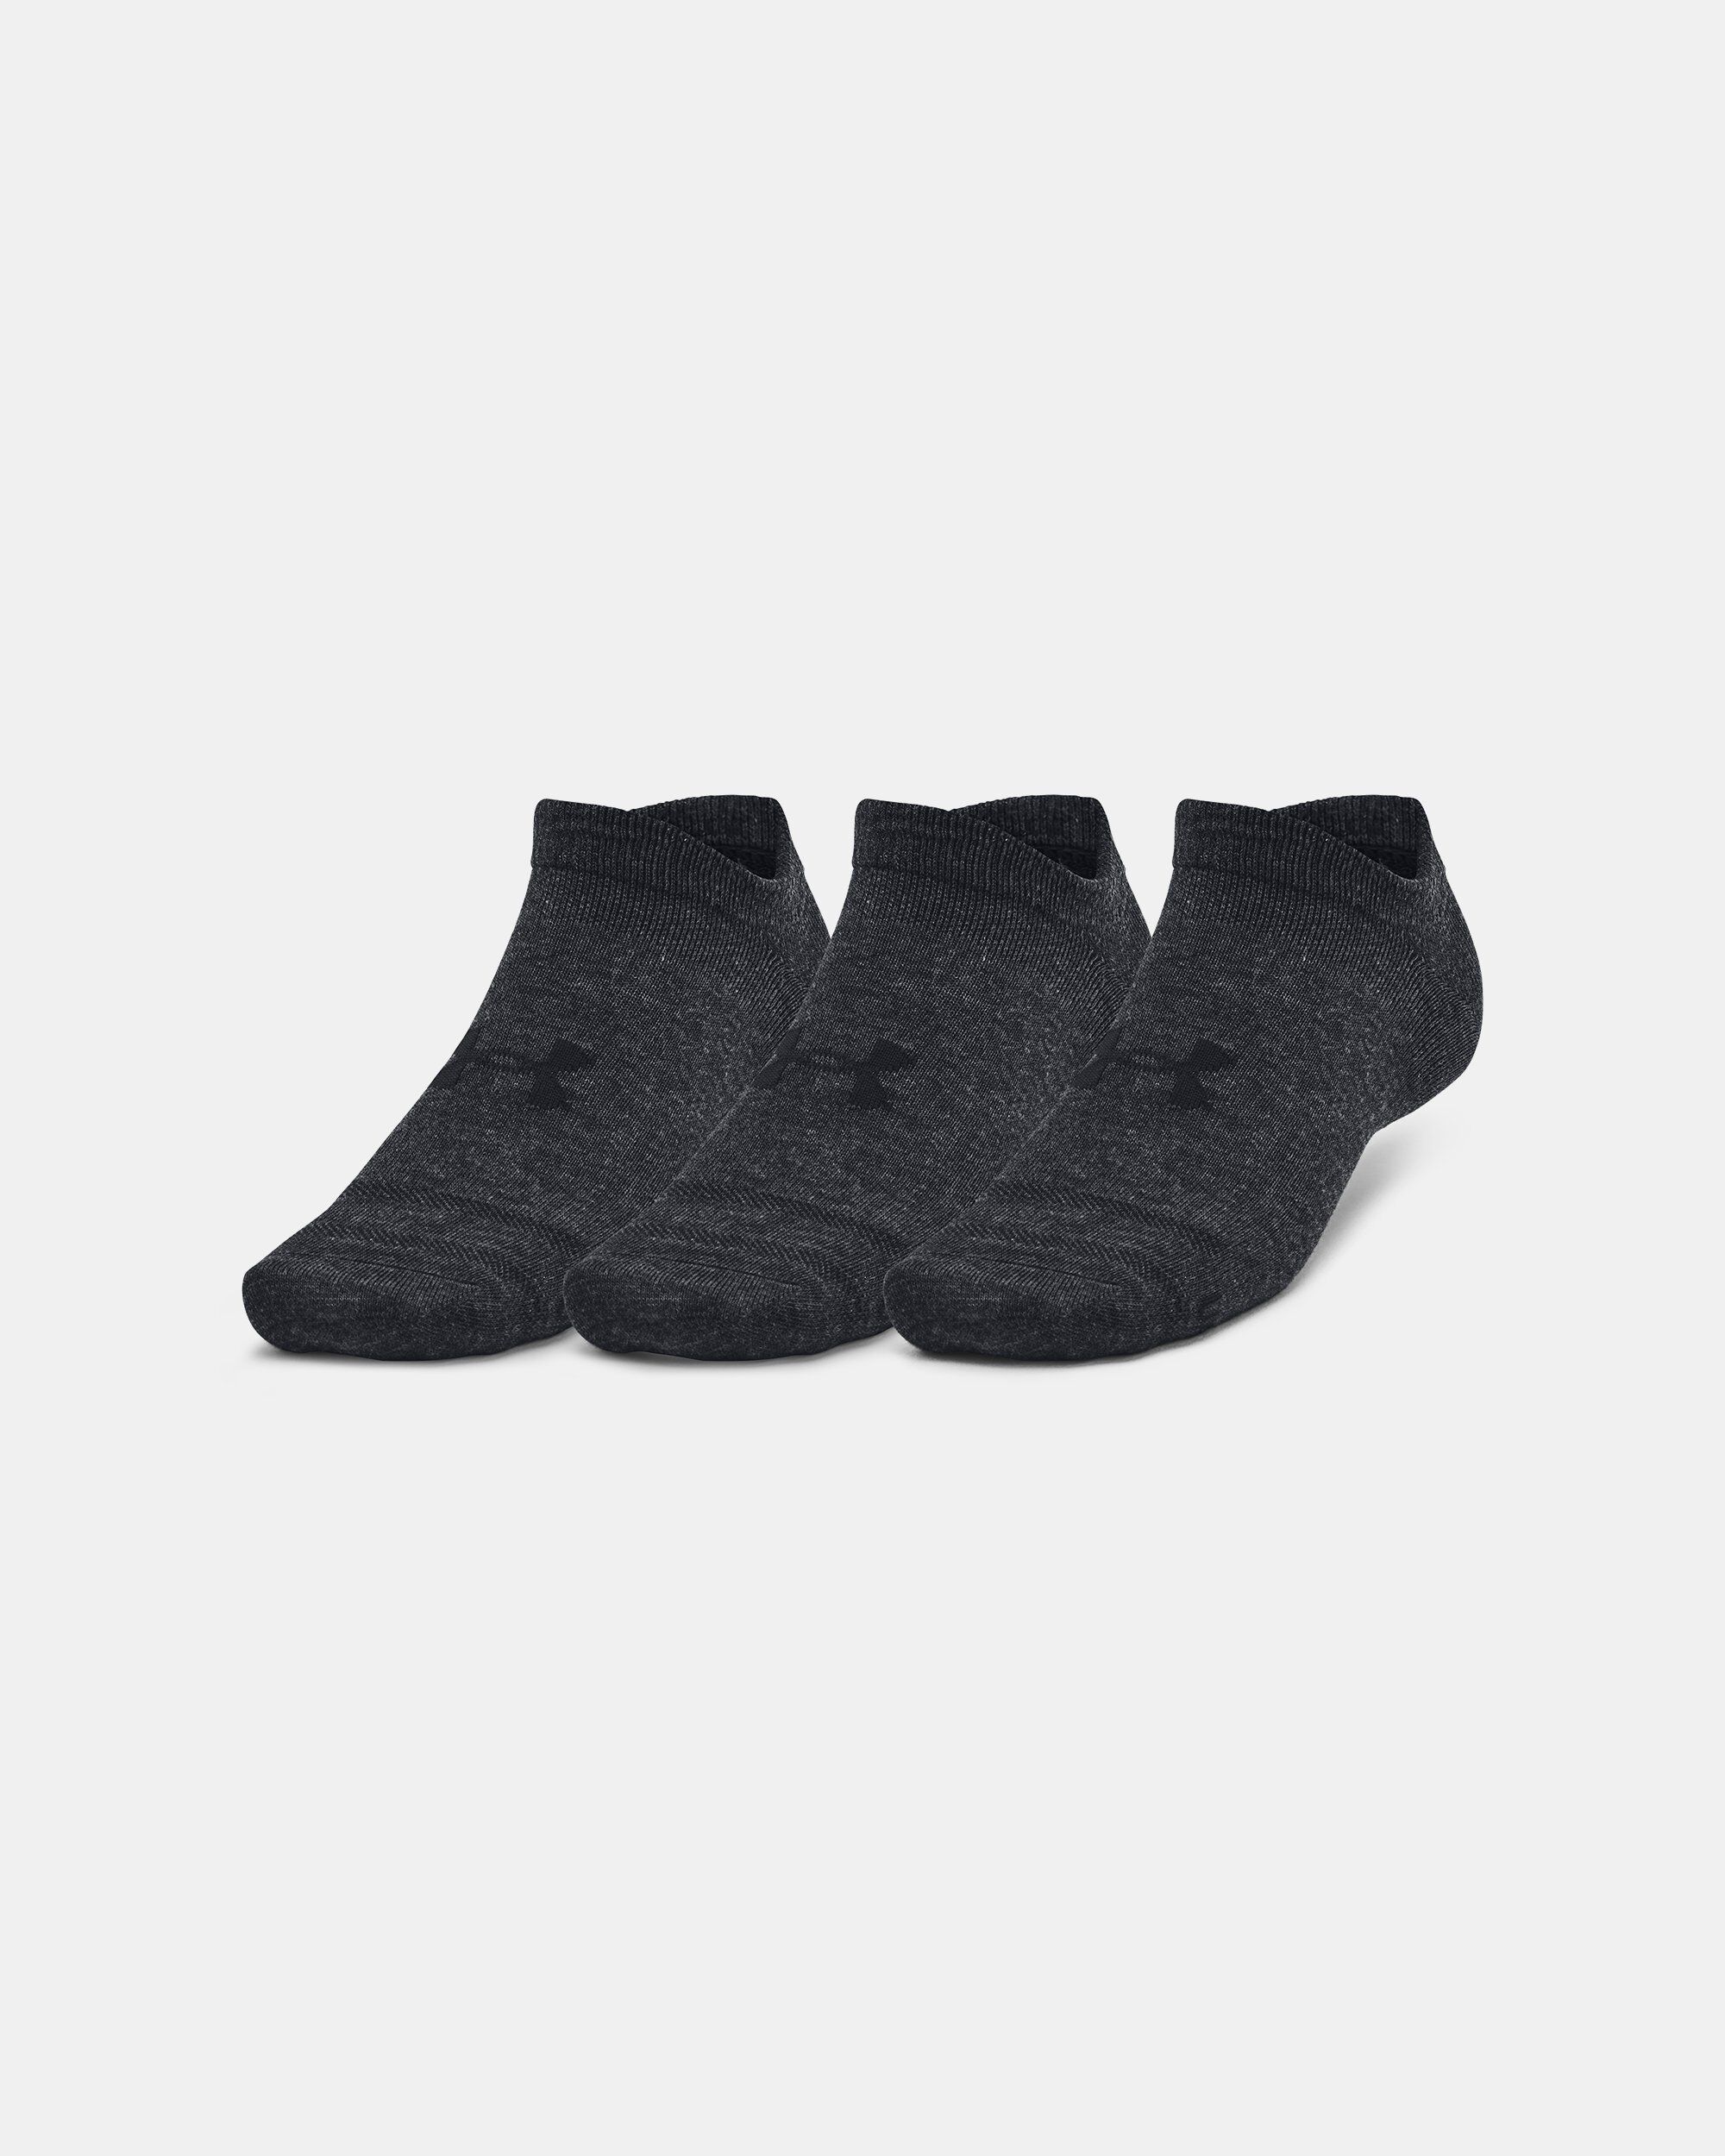 Shop Men's Socks, Sport Black and White Socks in Riyadh, KSA | Under Armour